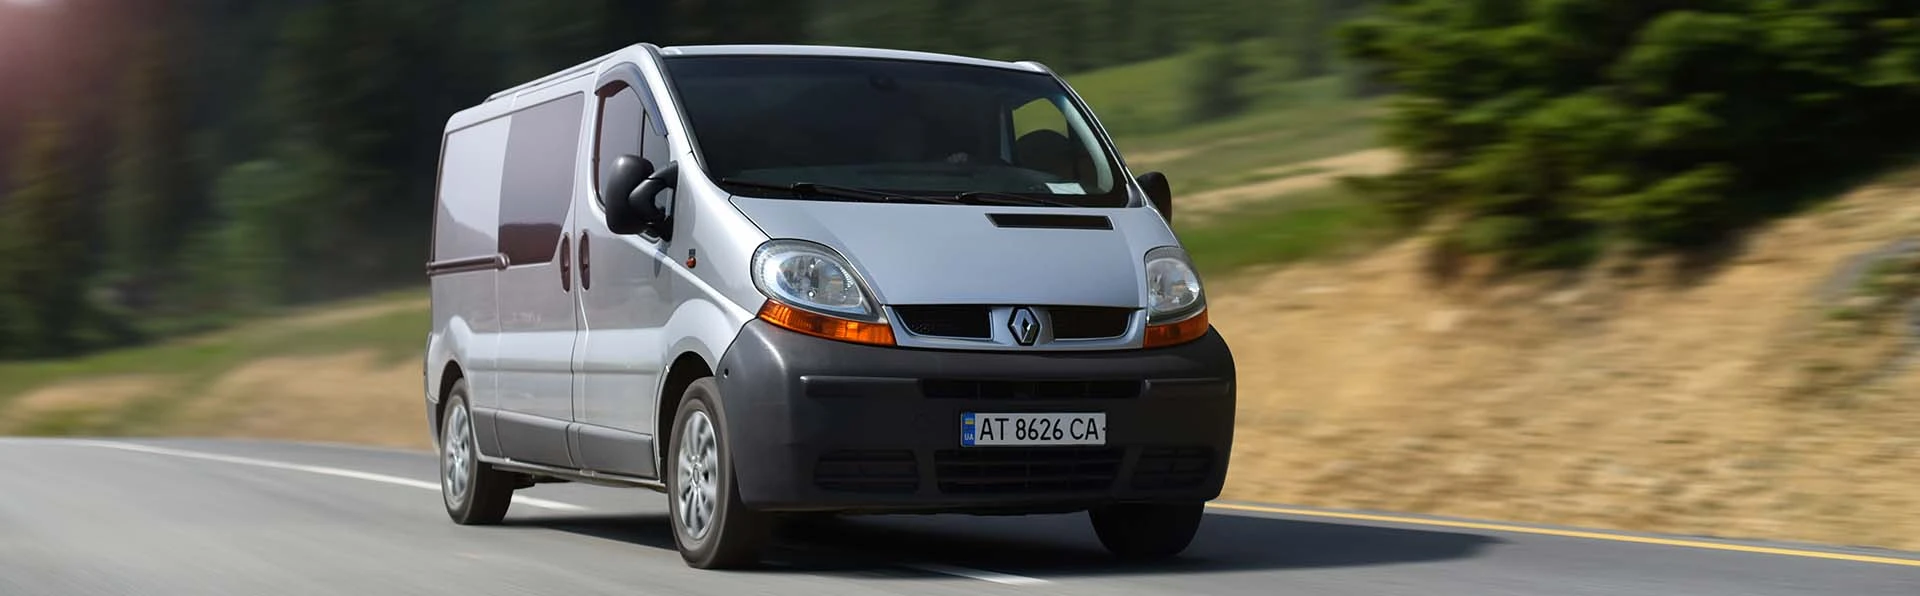 Renault Vans Review: The Renault Trafic